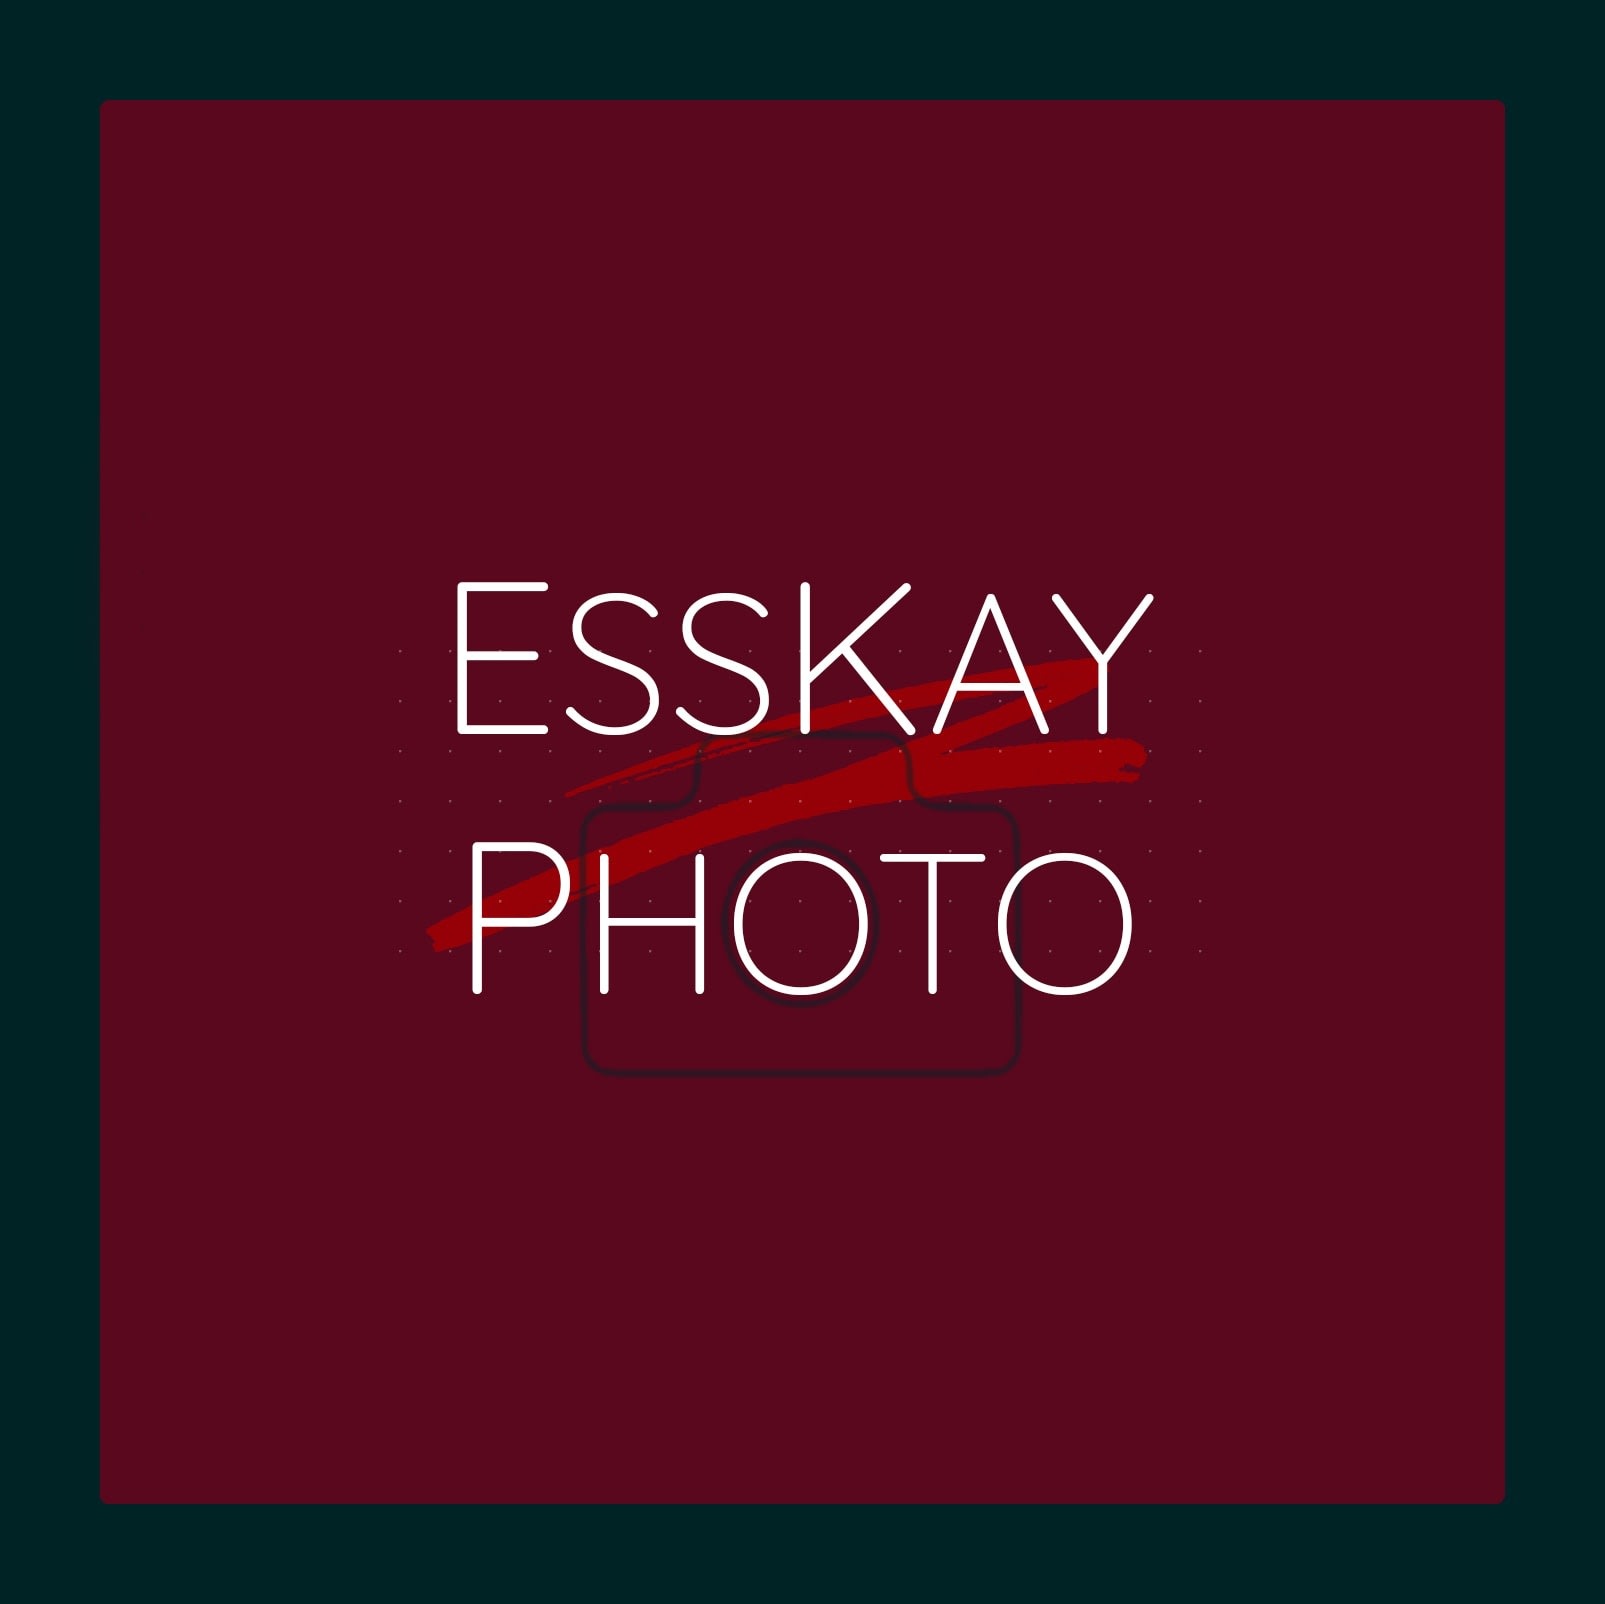 EssKay Photo